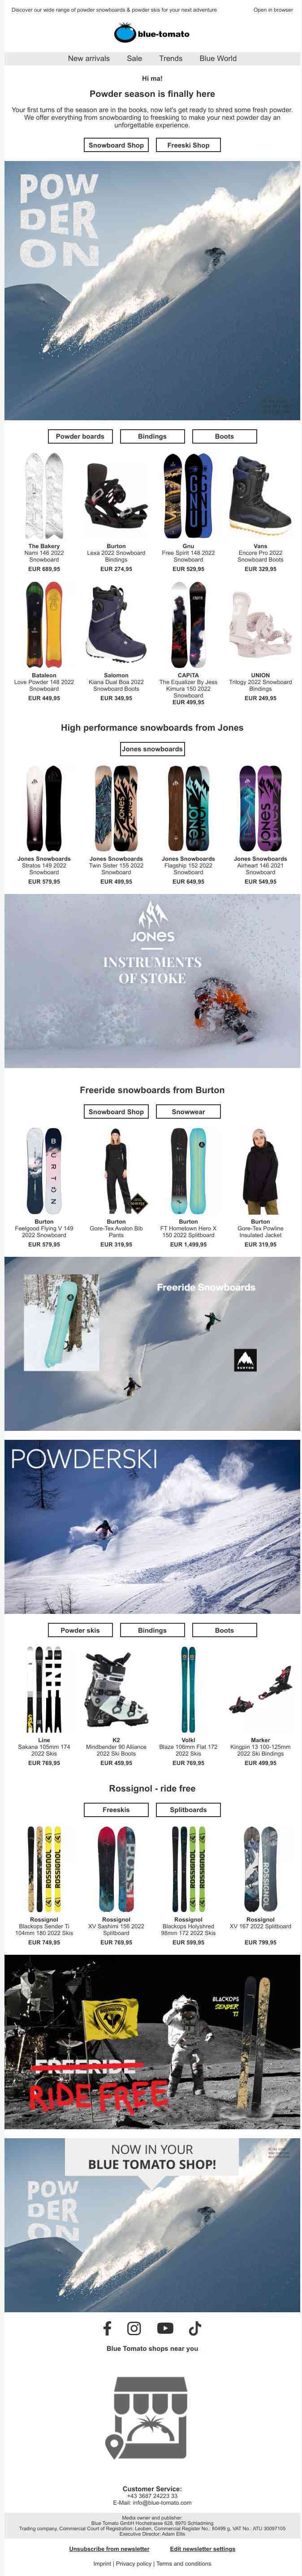 Powder boards and powder skis ❄️